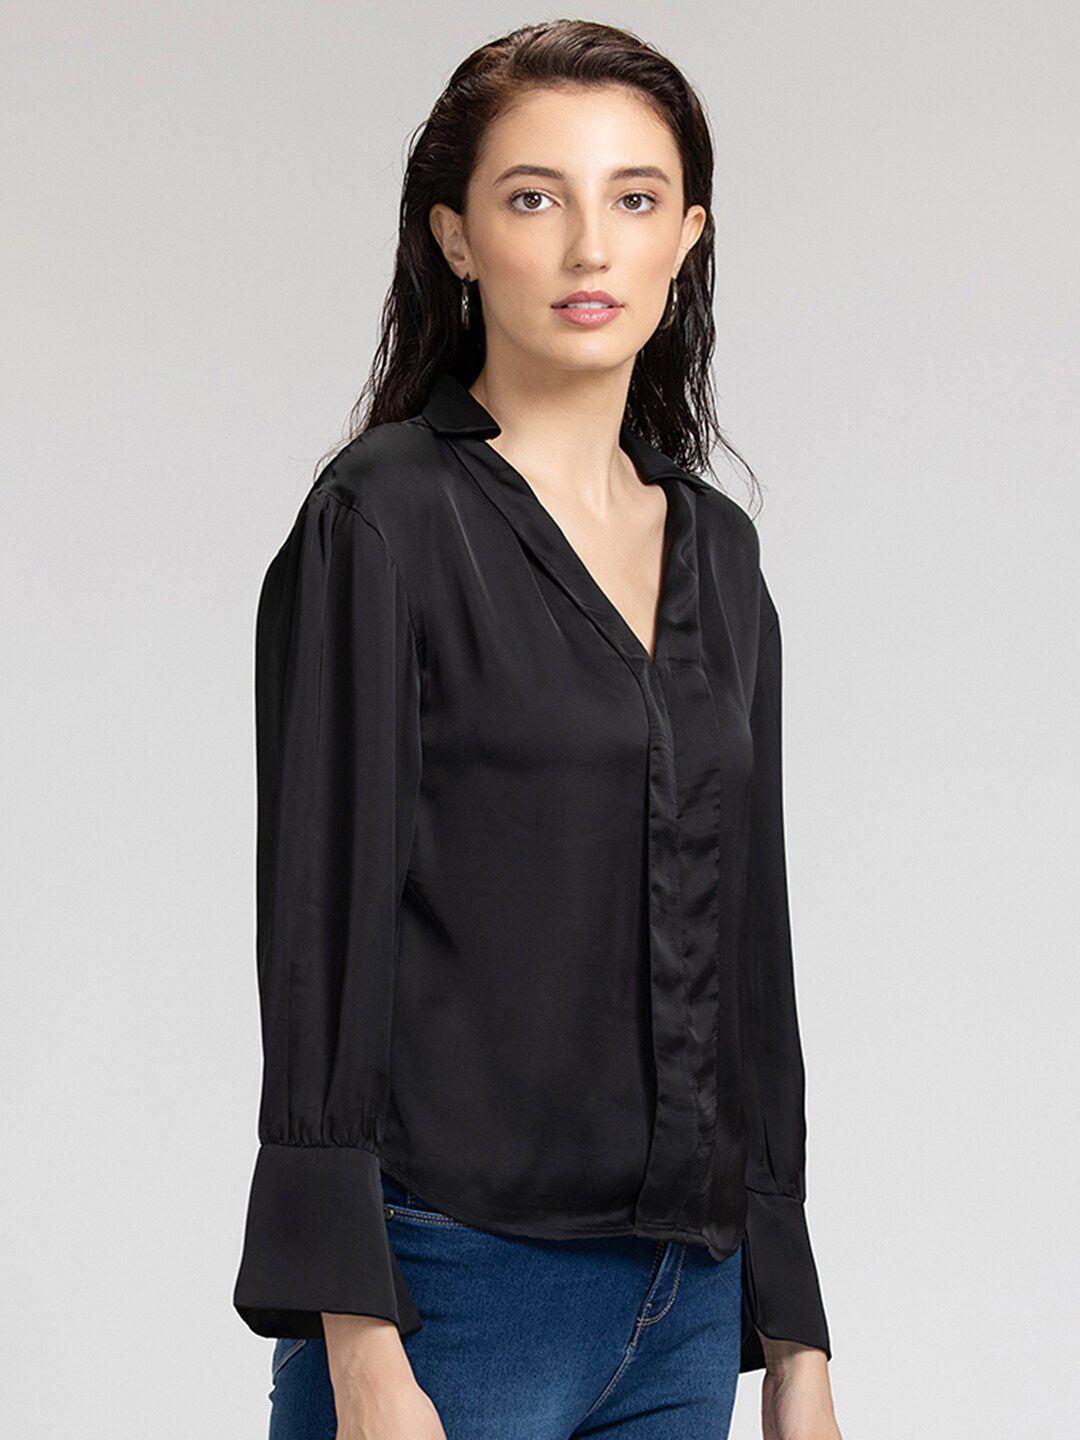 shaye black solid long sleeves casual shirt style top